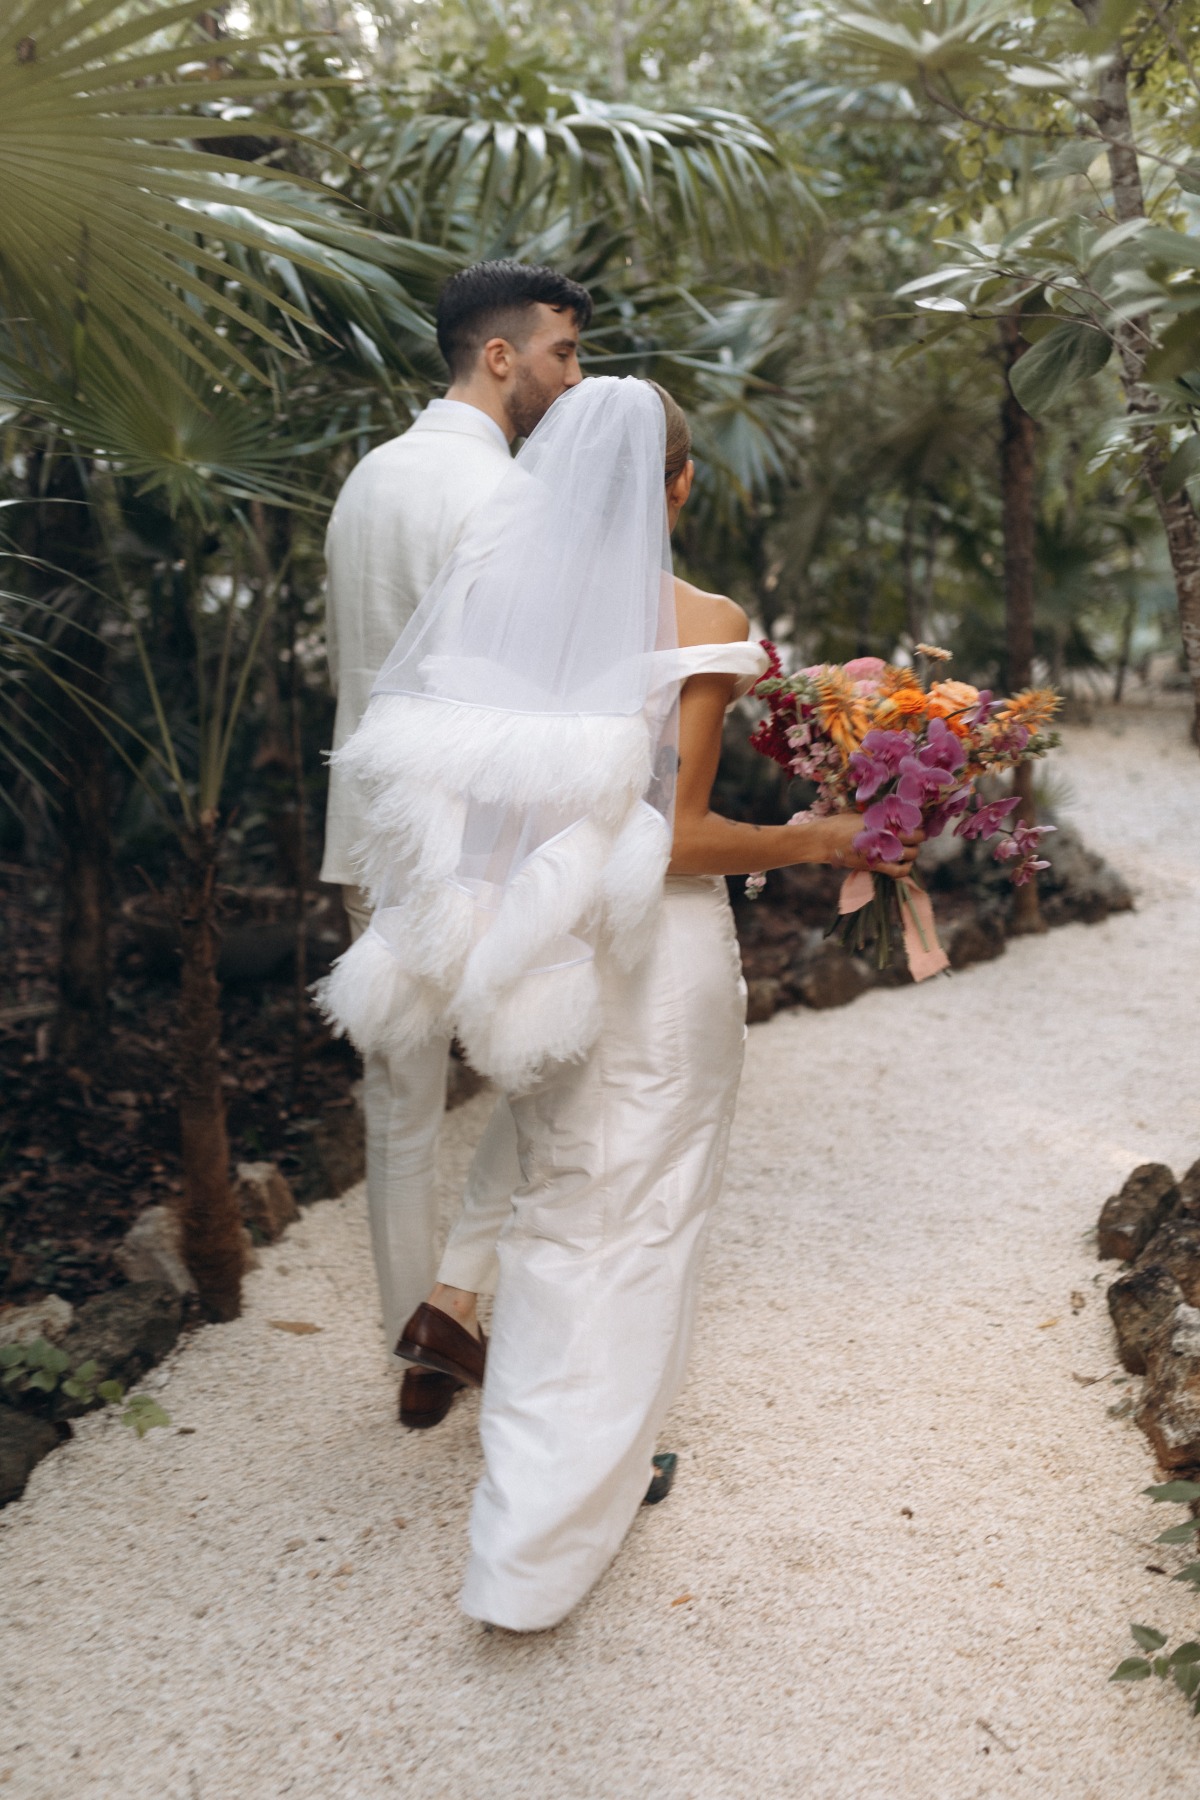 All white Tulum wedding attire